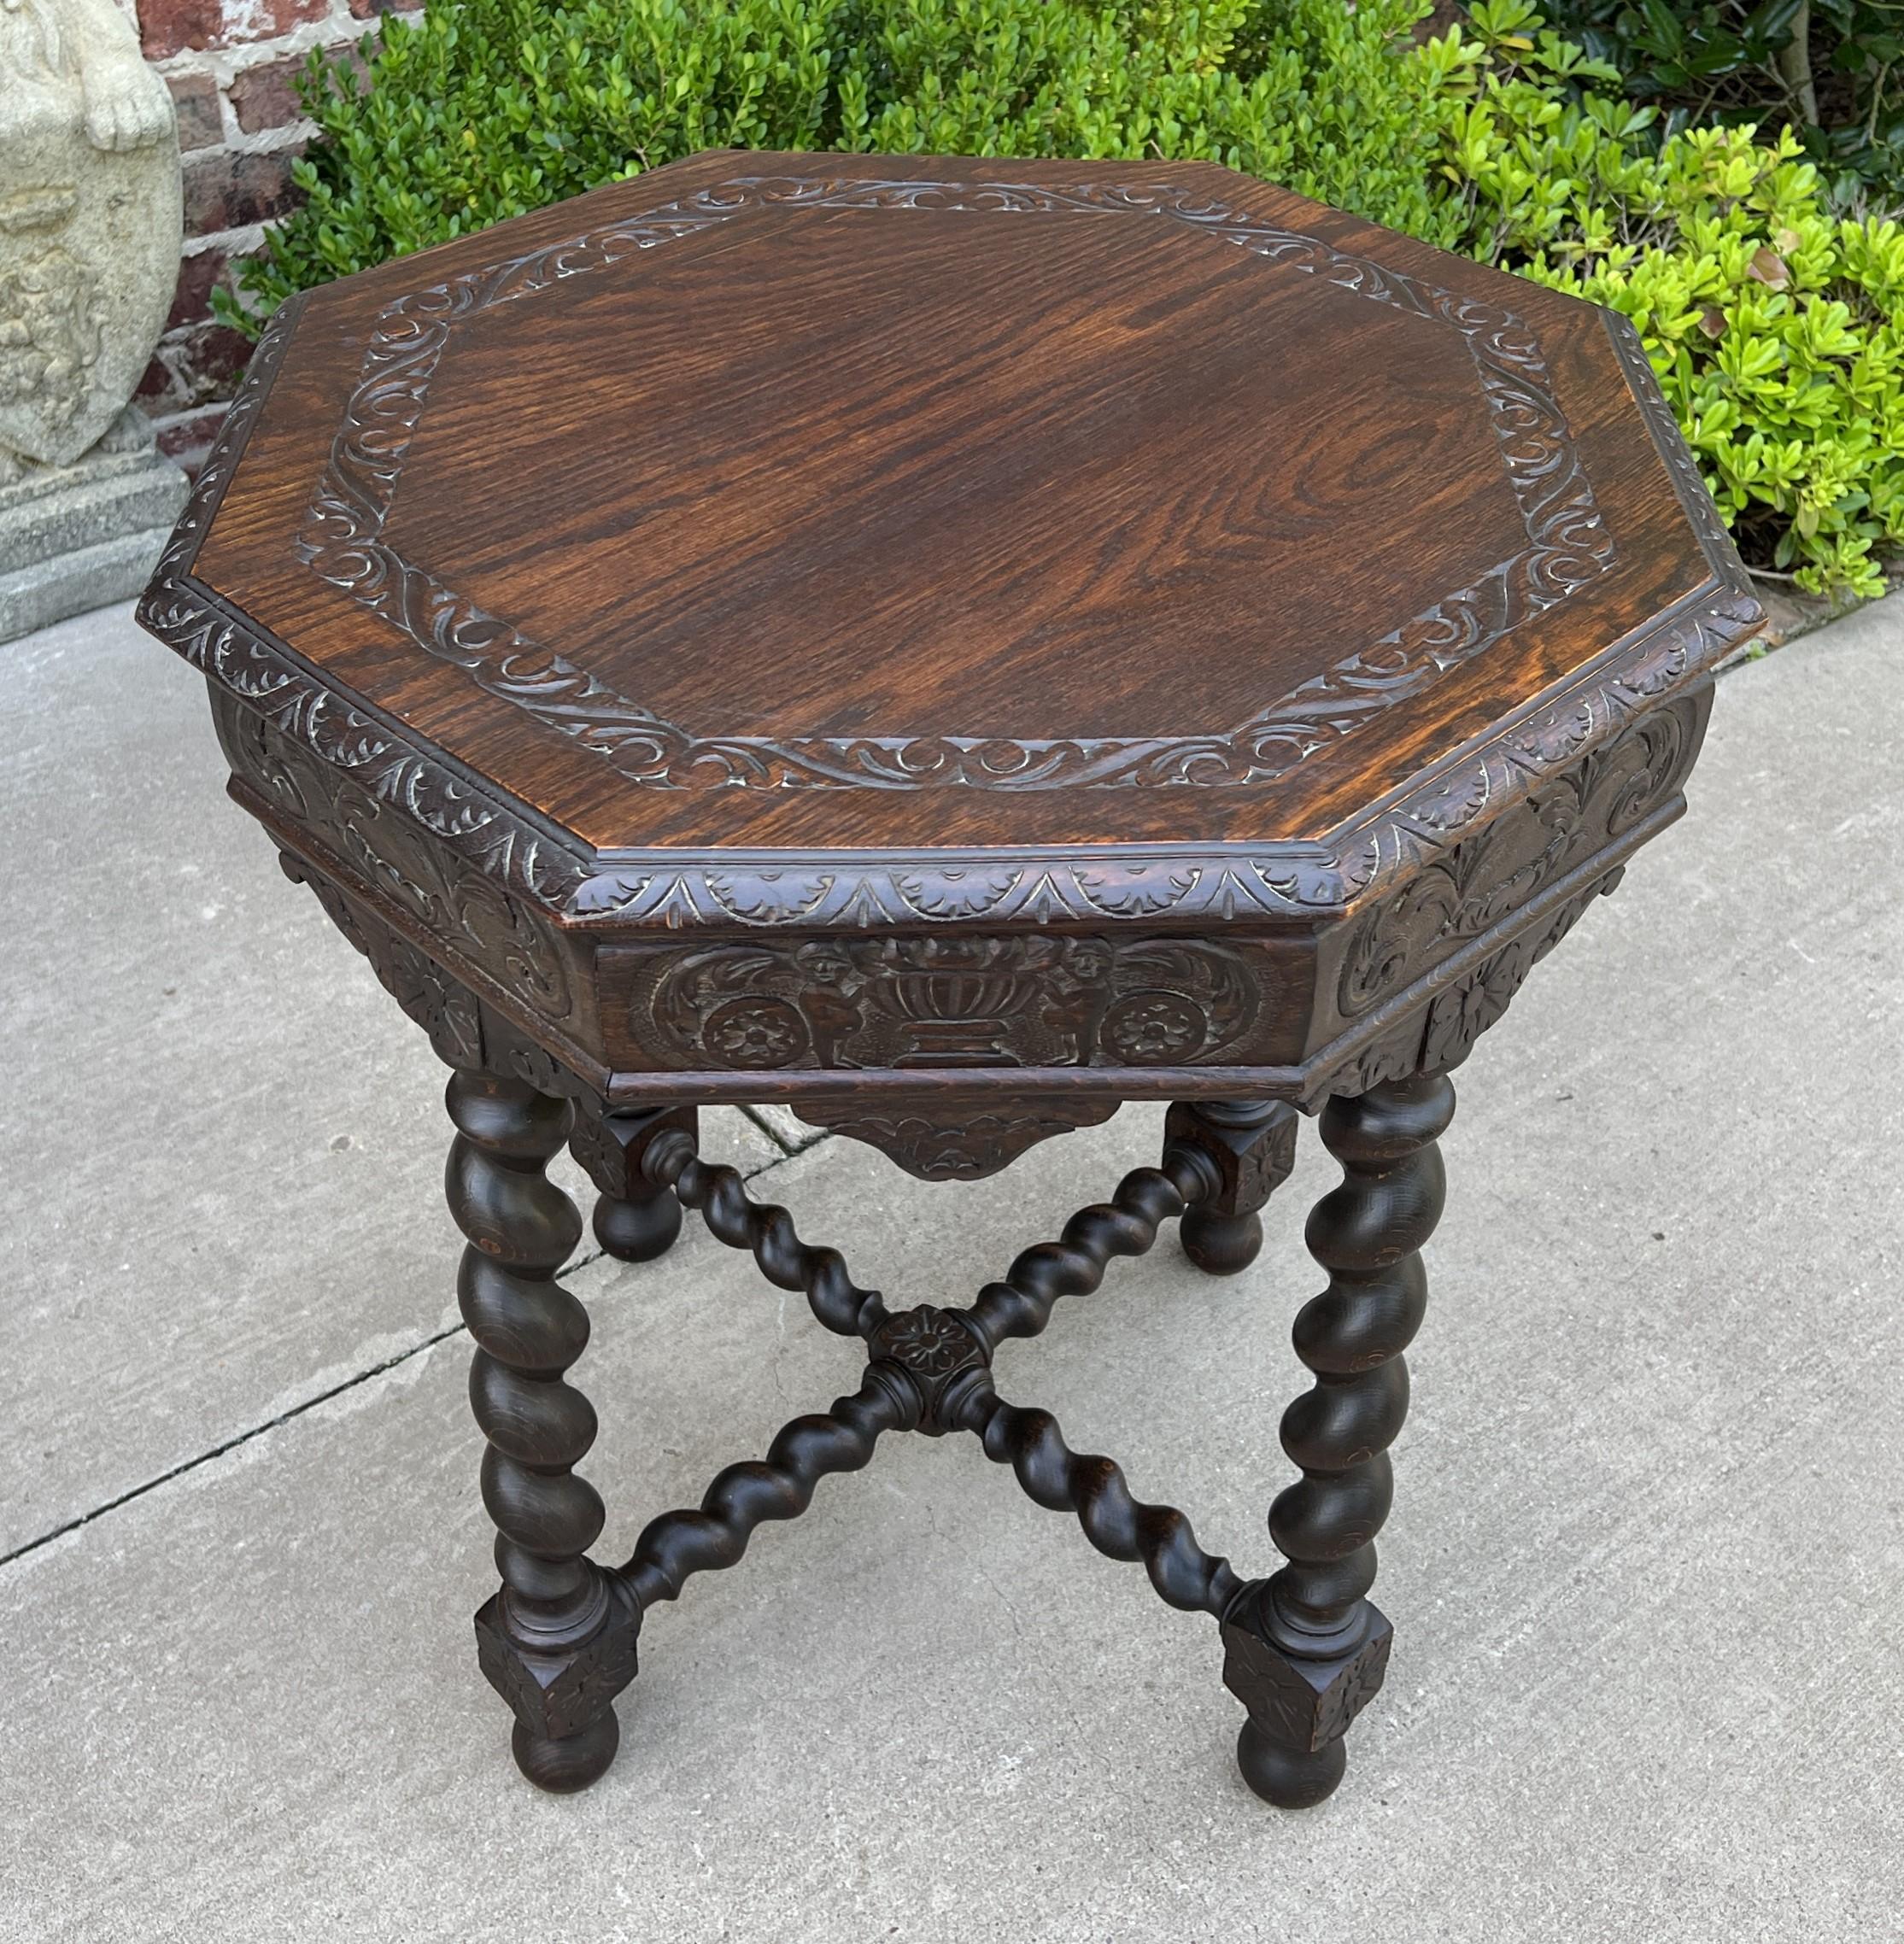 Antique French Table Barley Twist Octagonal Renaissance Revival Oak Carved 19thc For Sale 6